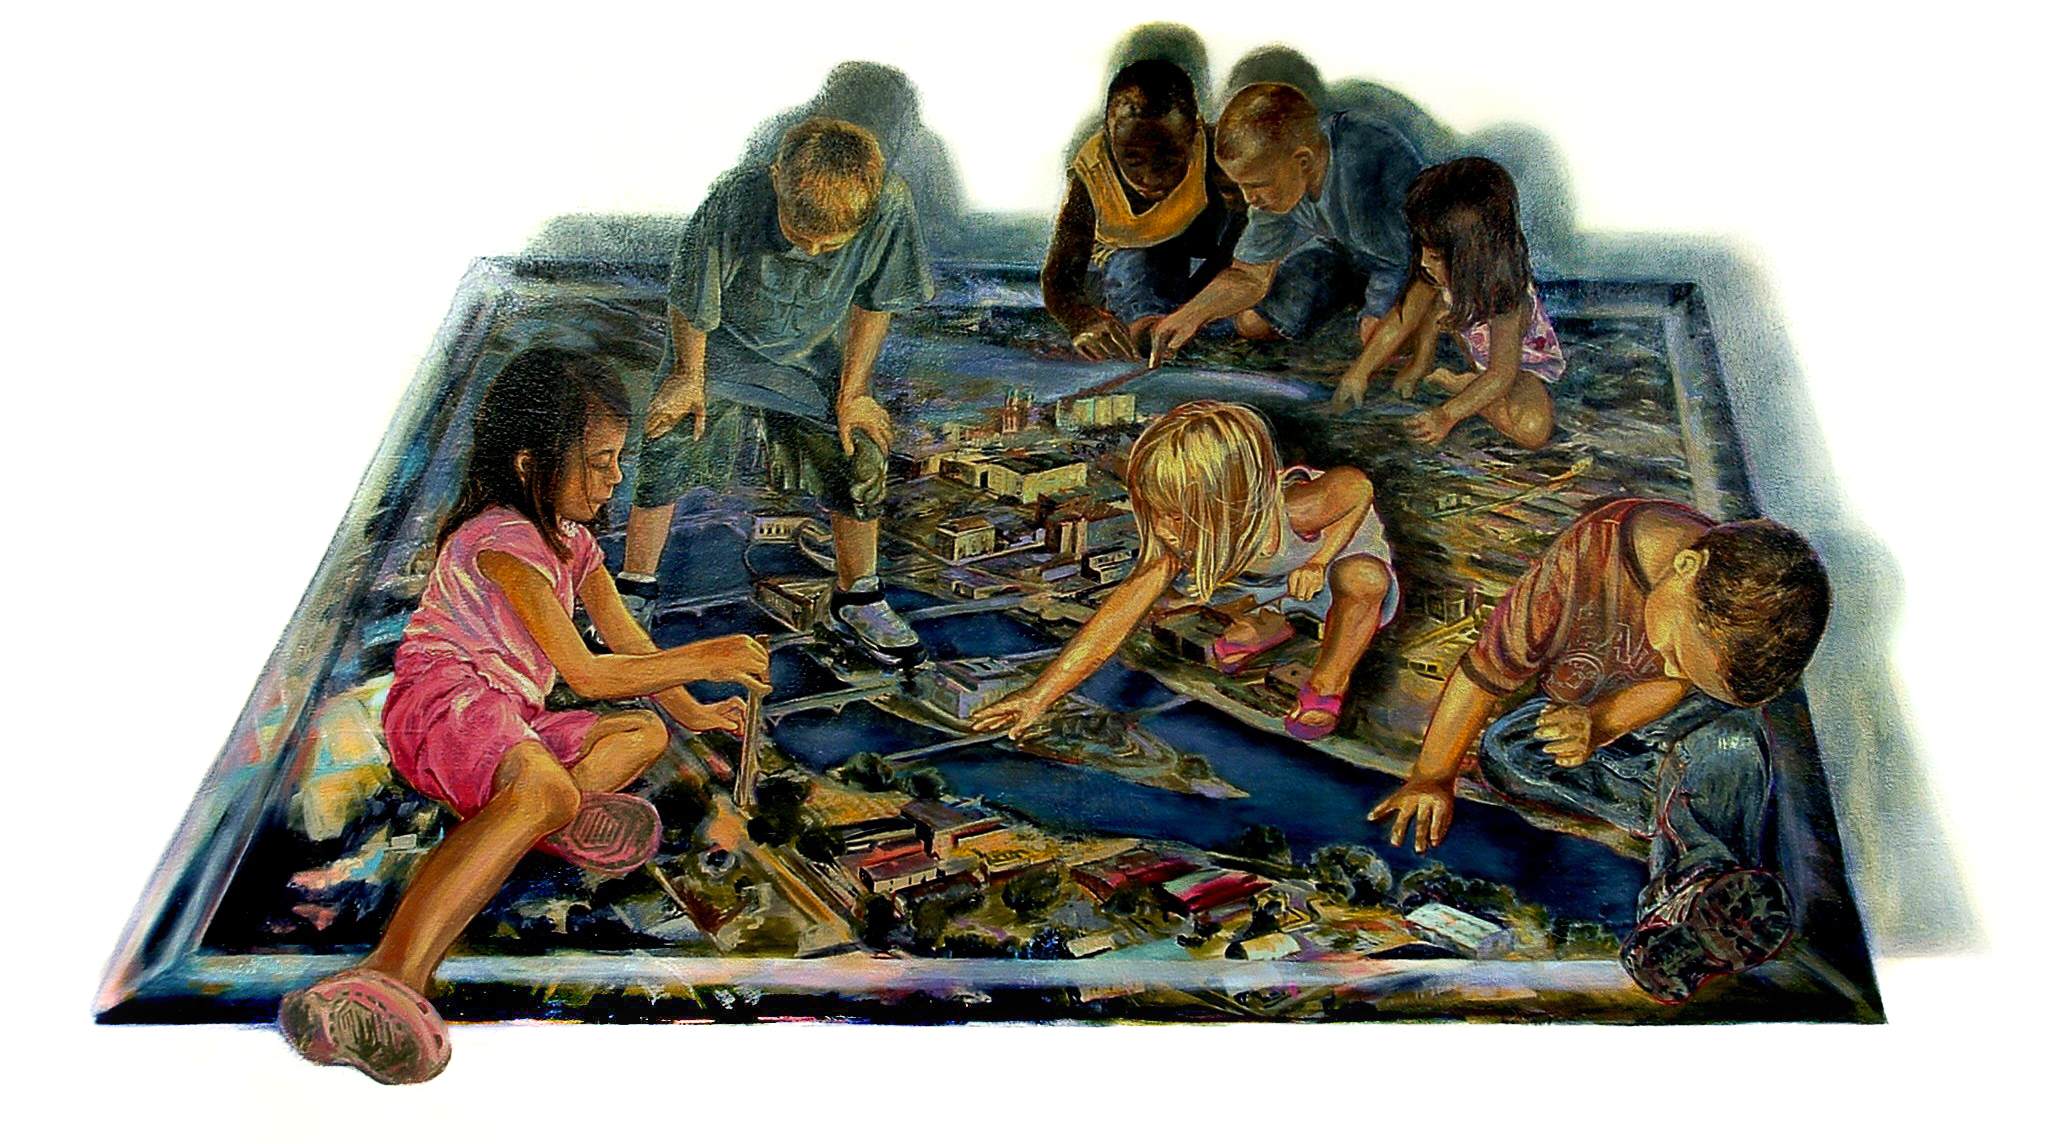 mural of children adding new bridges to the landscape